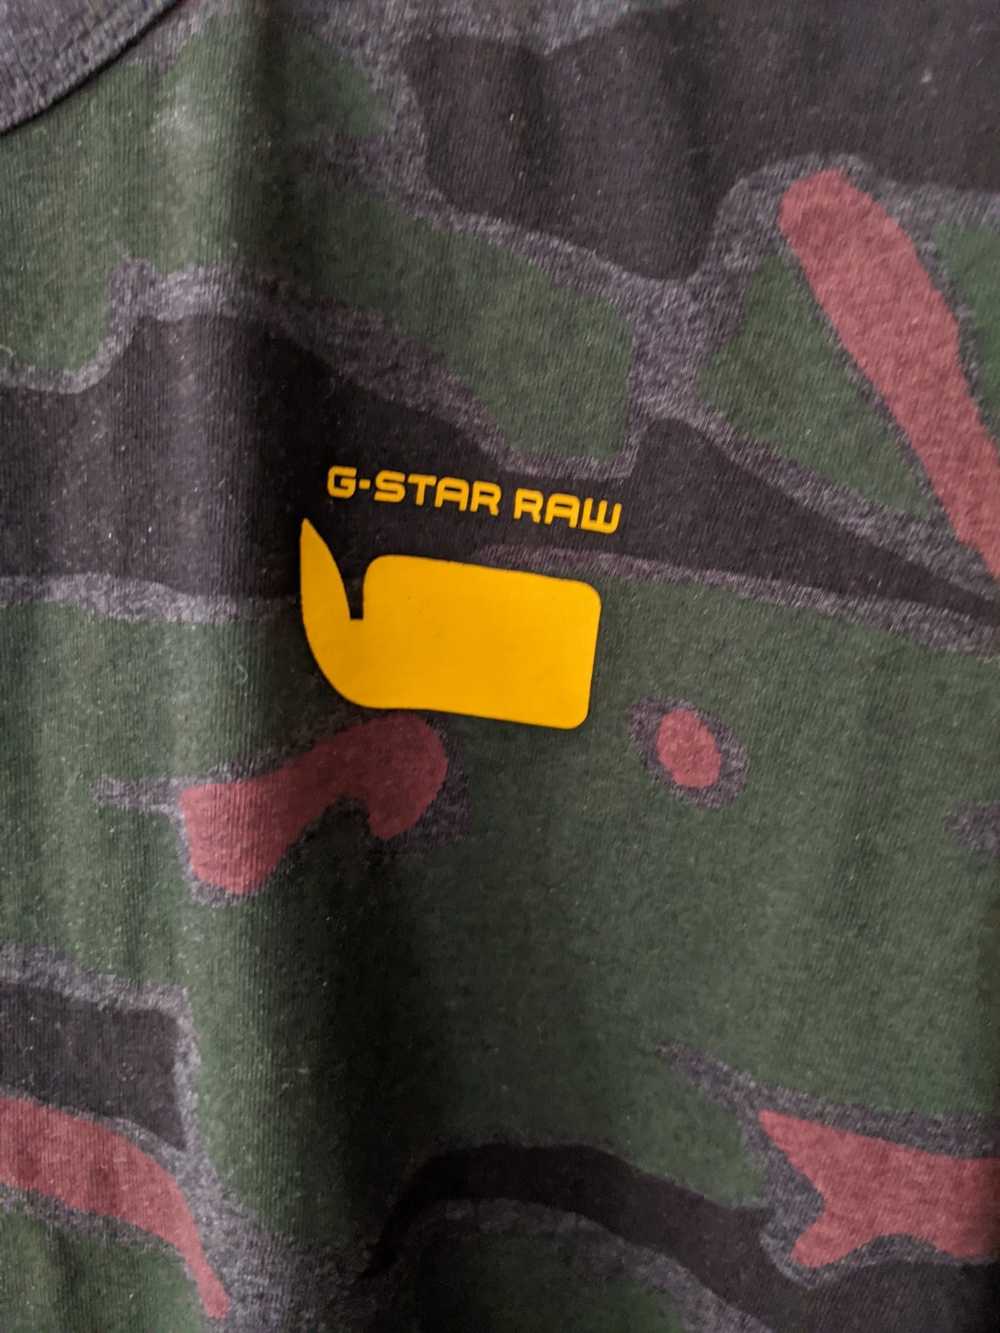 Gstar G star raw x gstar RAW t shirt - image 2